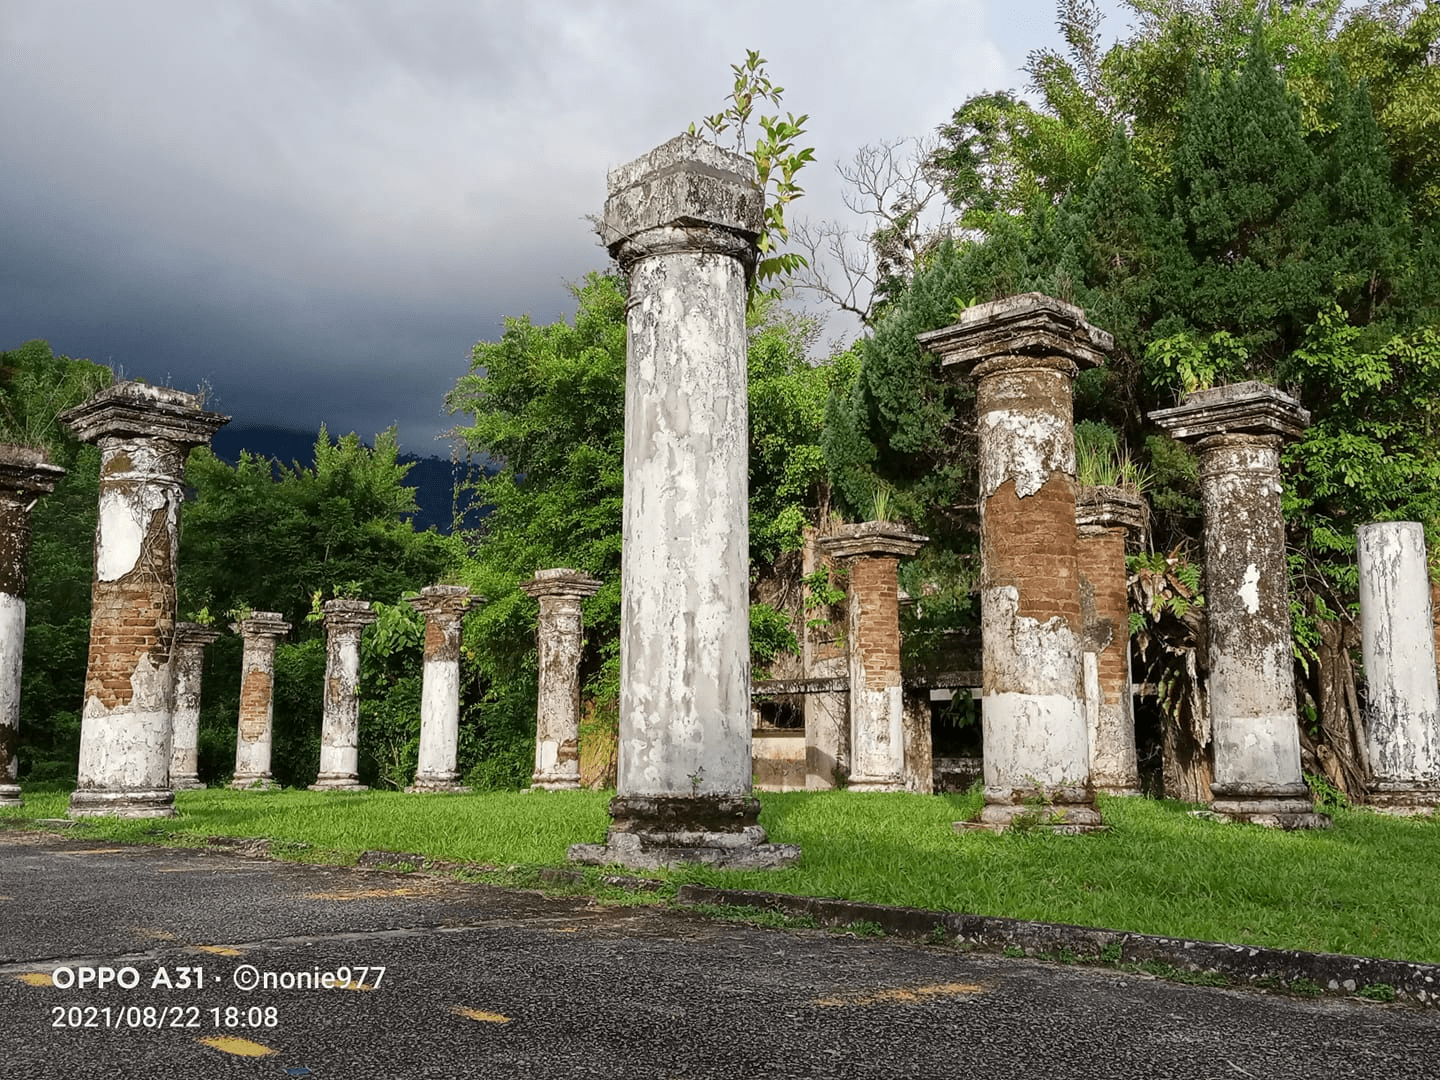 Abandoned building and ruins Malaysia - pillars